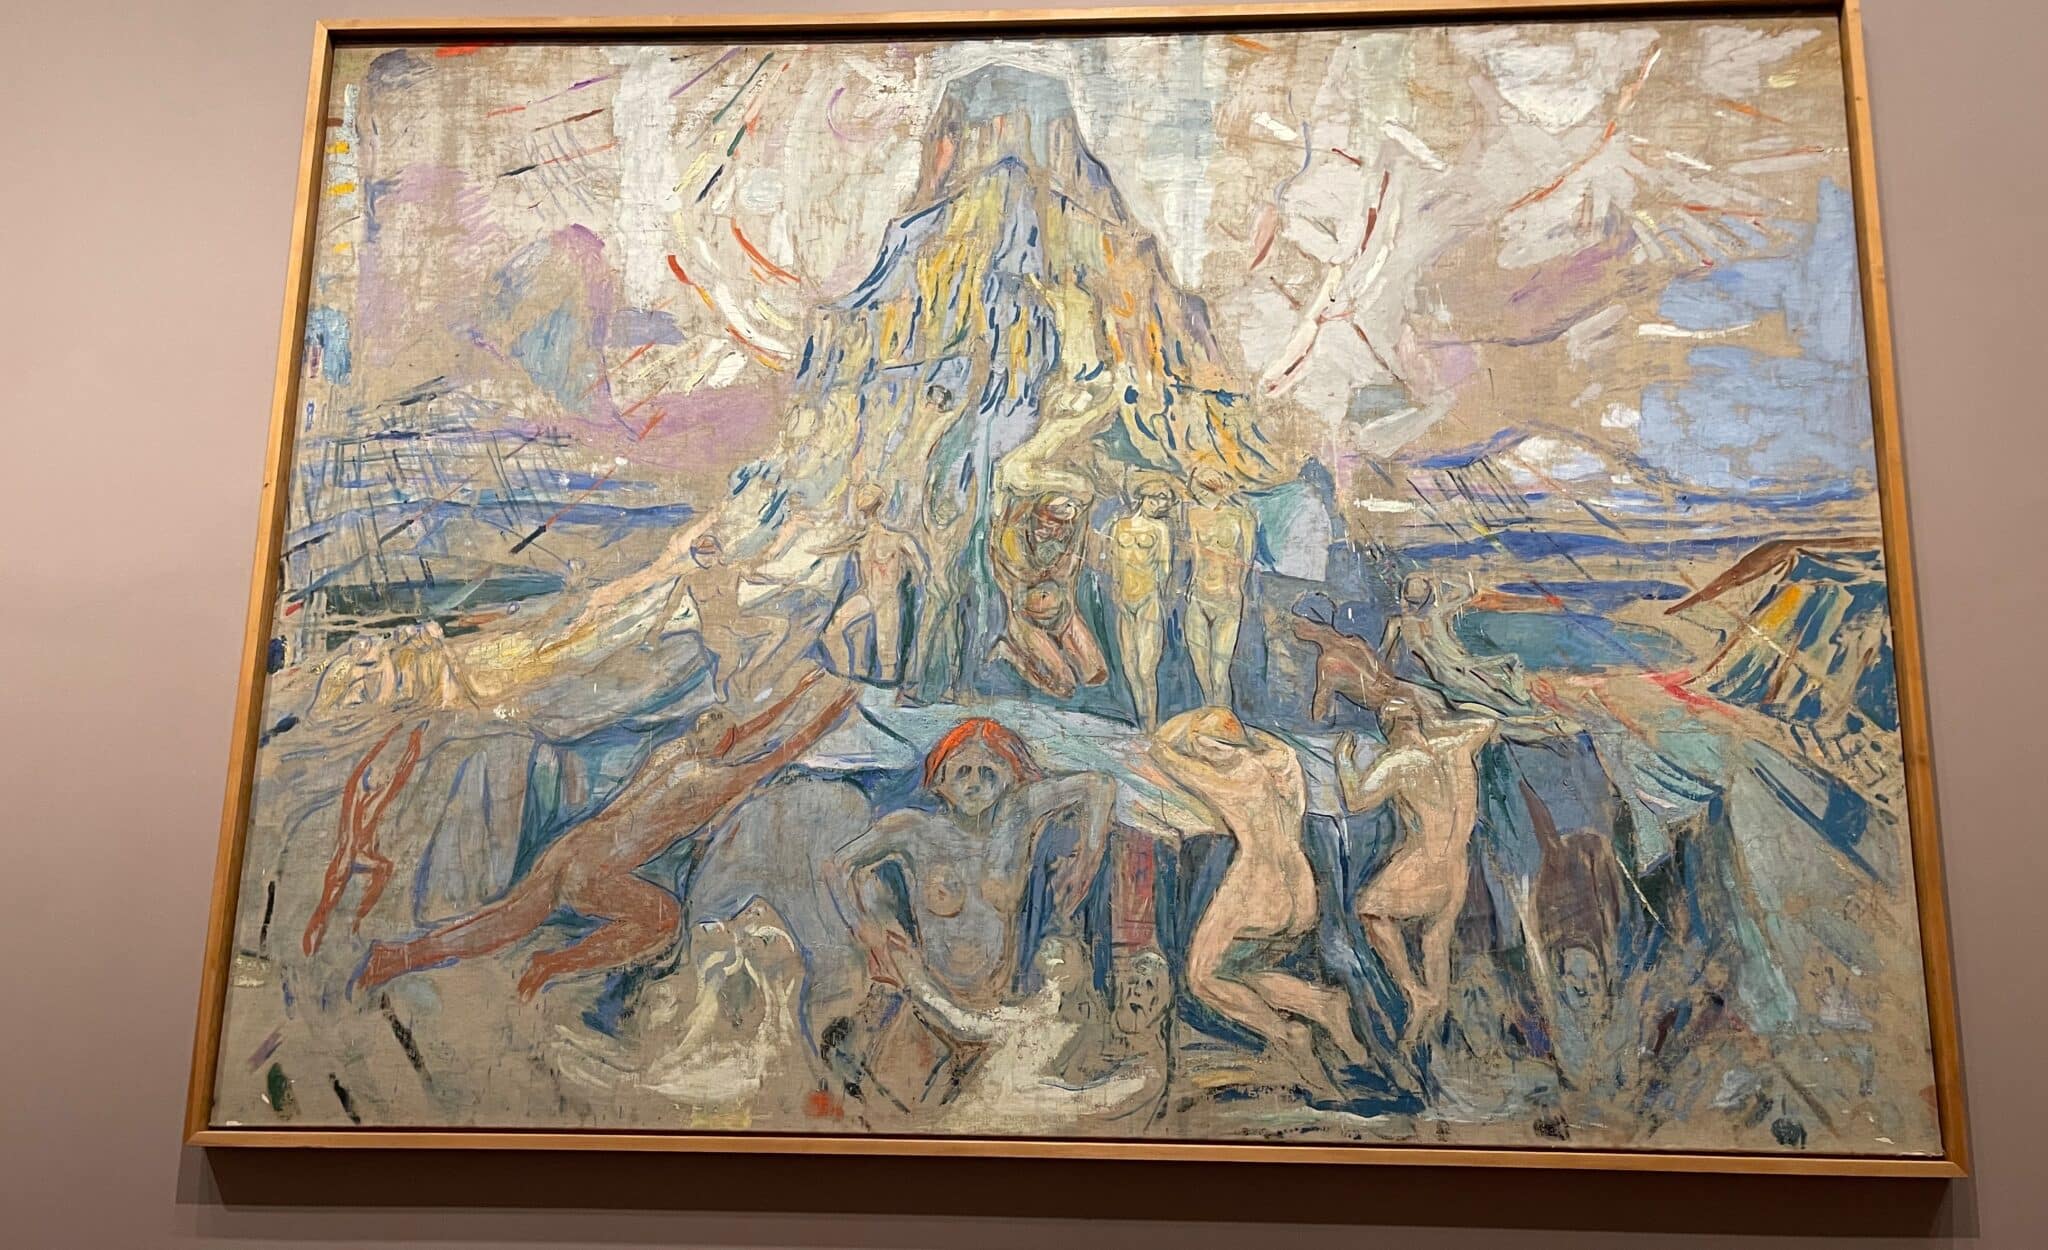 The Human Mountain Toward: Towards the Light by Edvard Munch